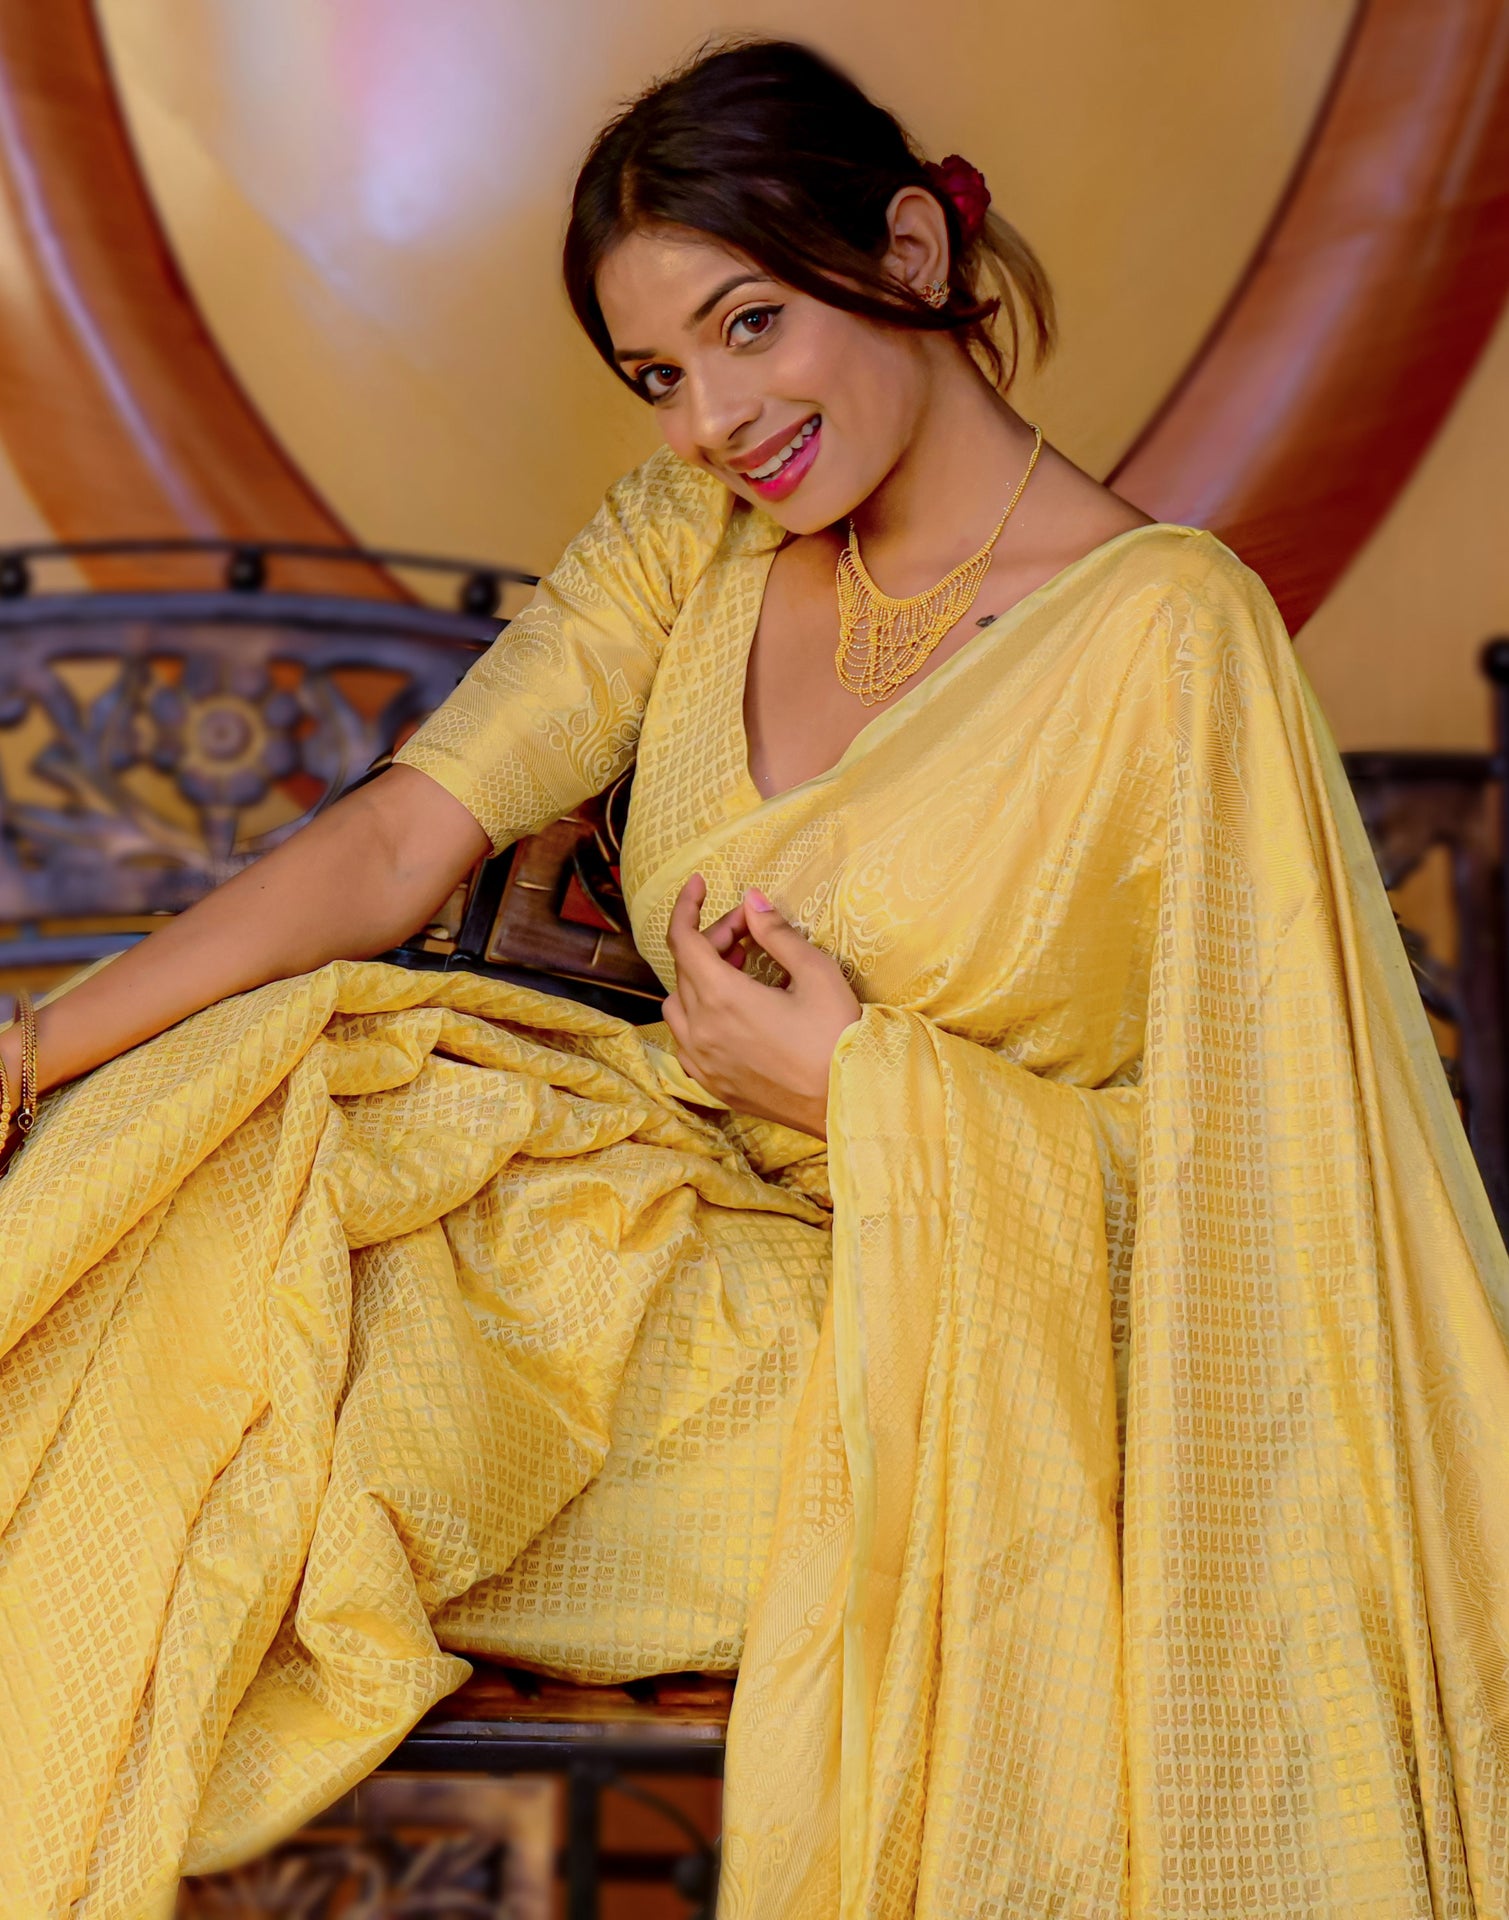 Mouni Roy Looks Ethereal as She Flaunts Her 'Bongo Bala' Avatar in Golden  Silk Saree This Durga Puja | India.com